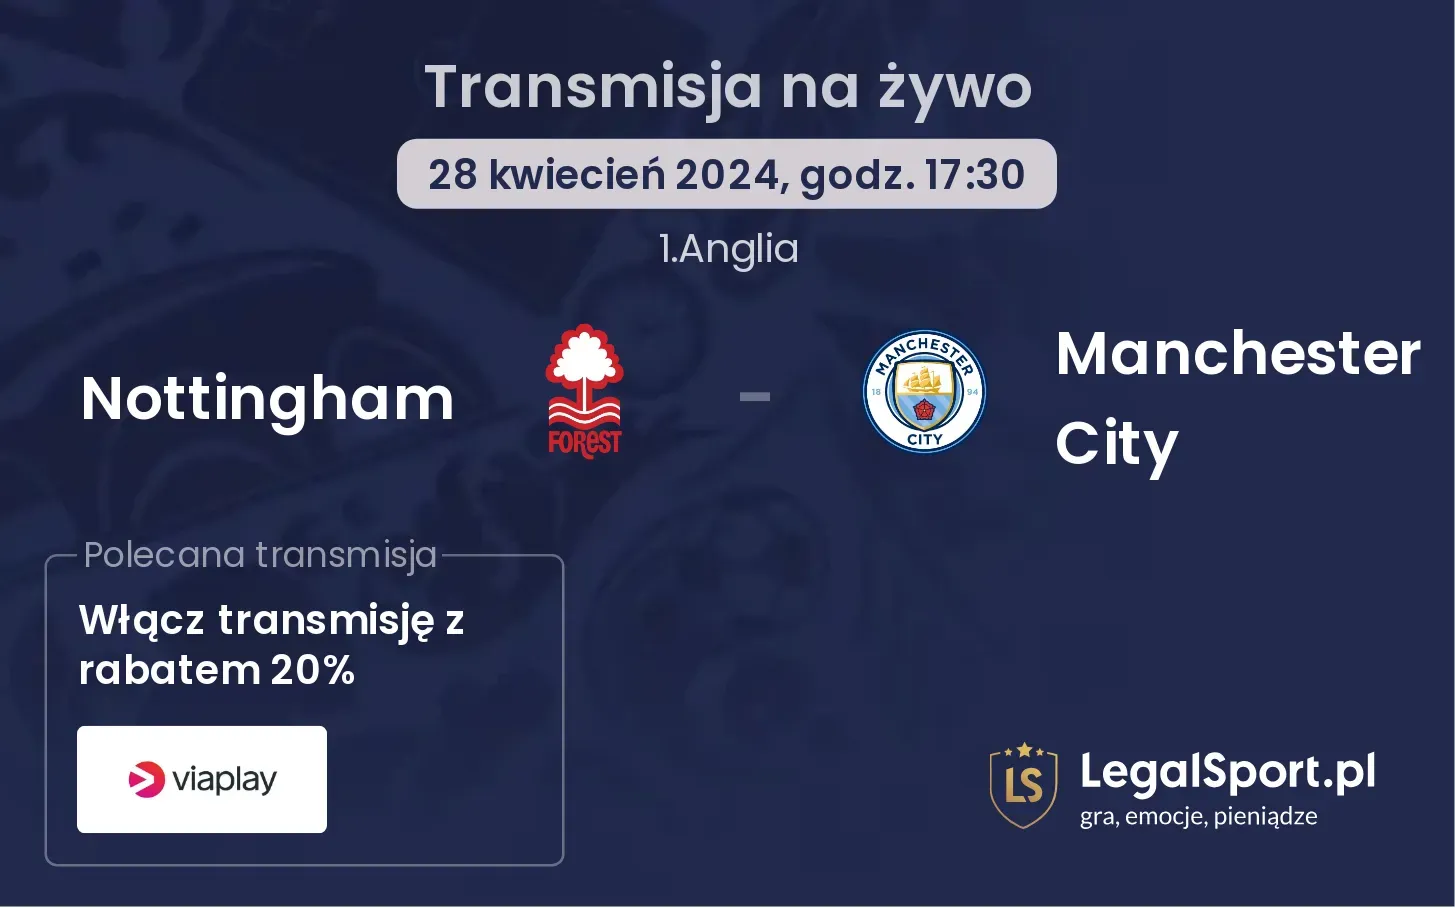 Nottingham - Manchester City transmisja na żywo